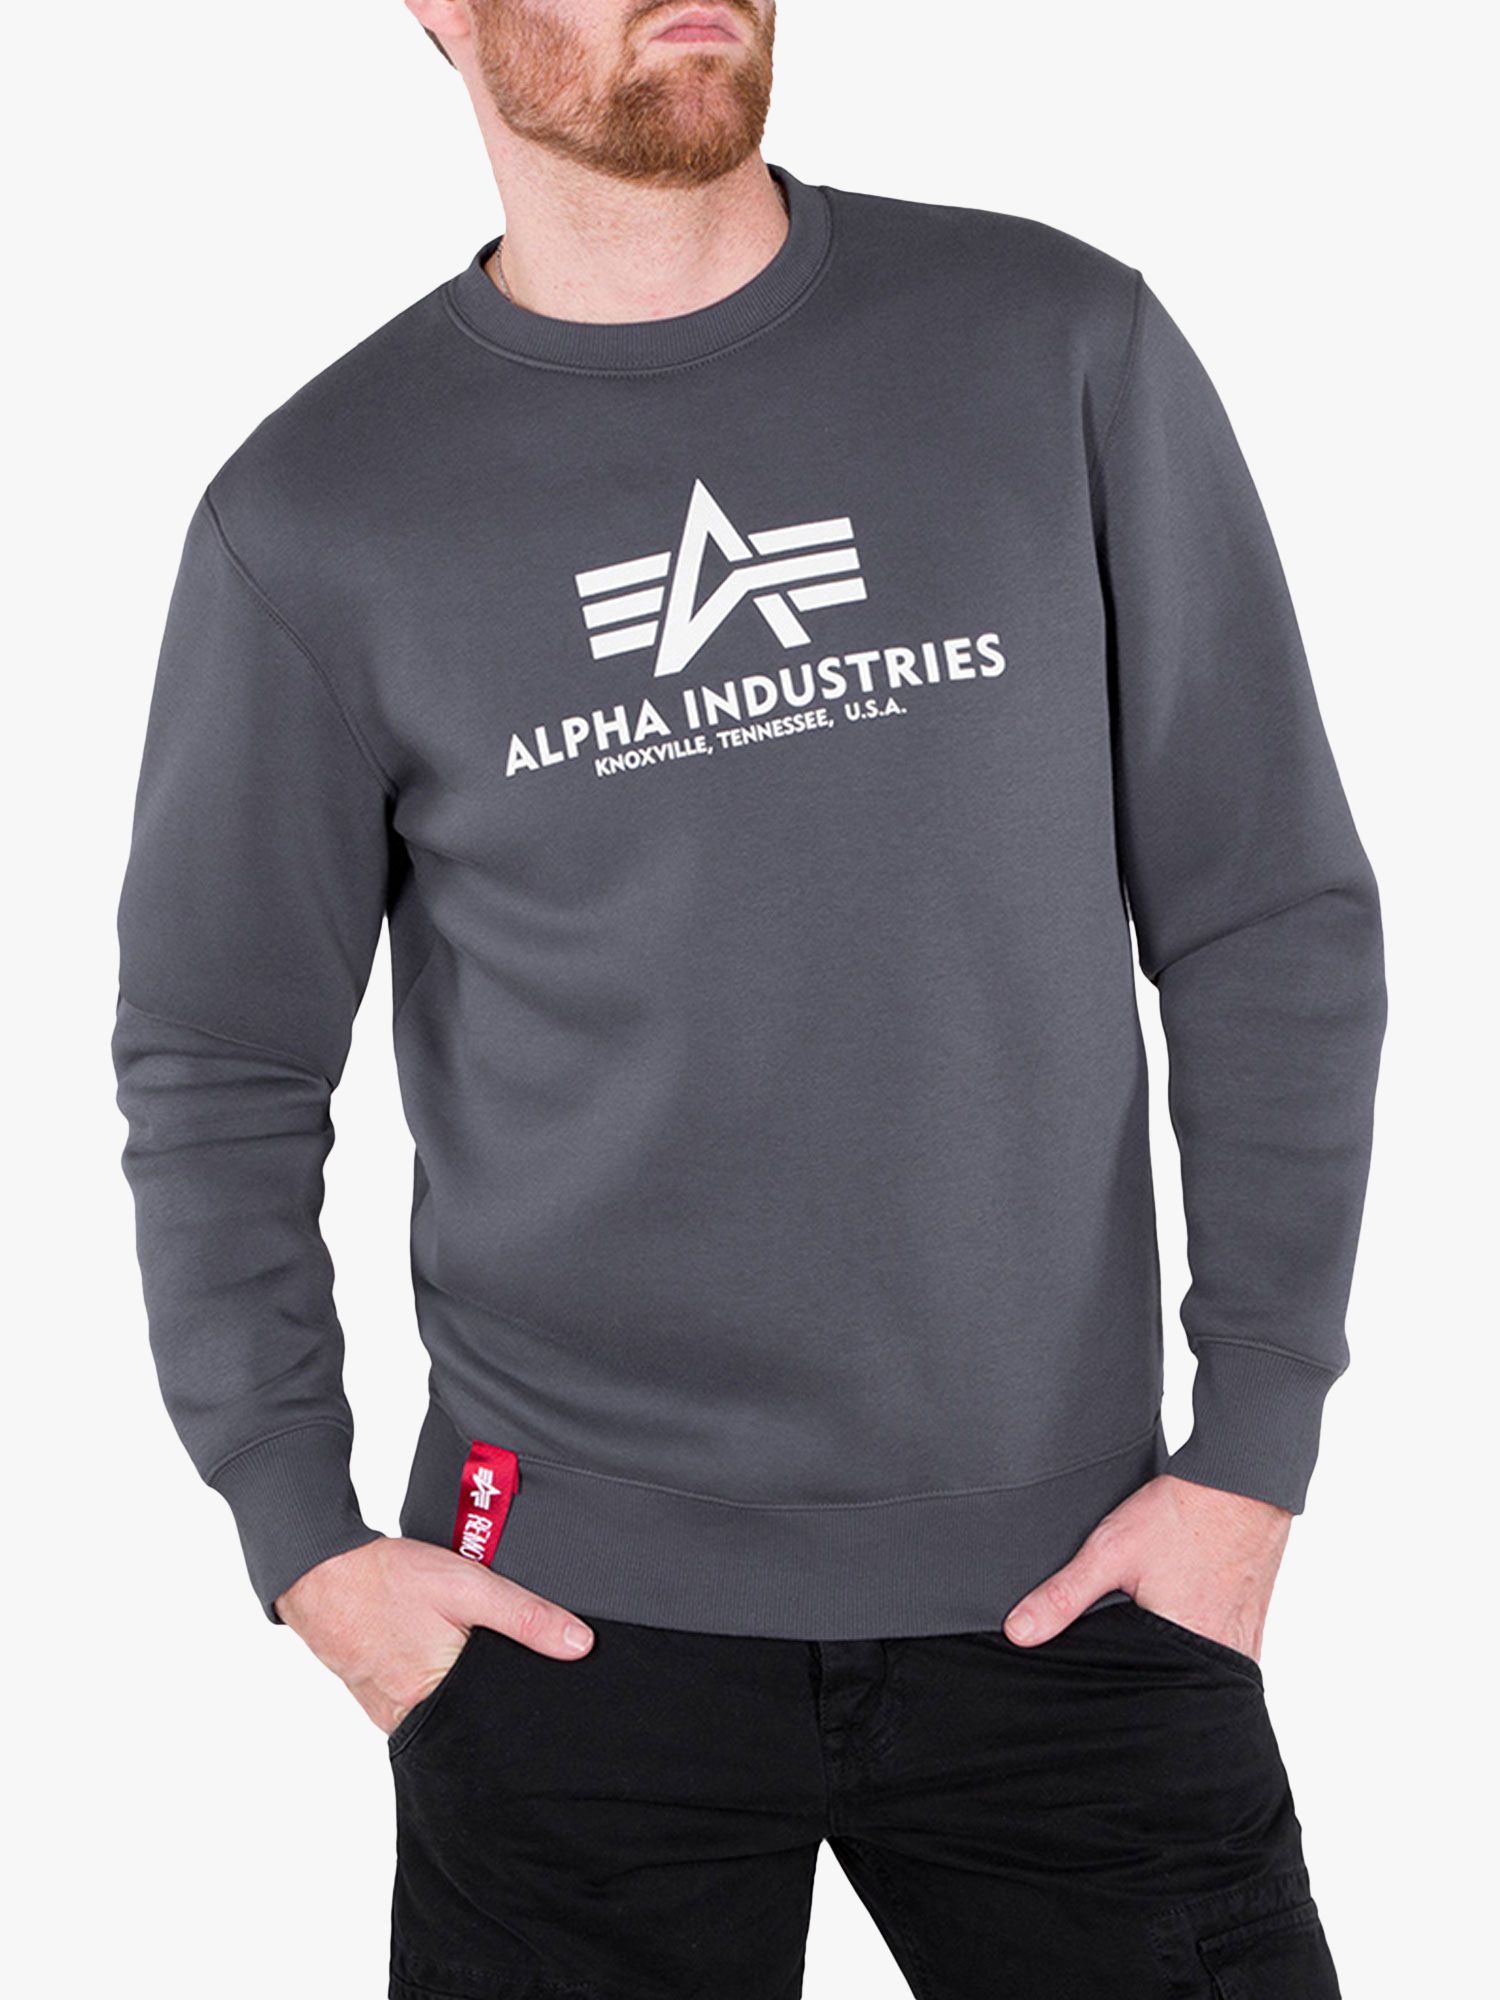 Alpha Industries Basic Logo Grey/Black, Sweatshirt, XS 136